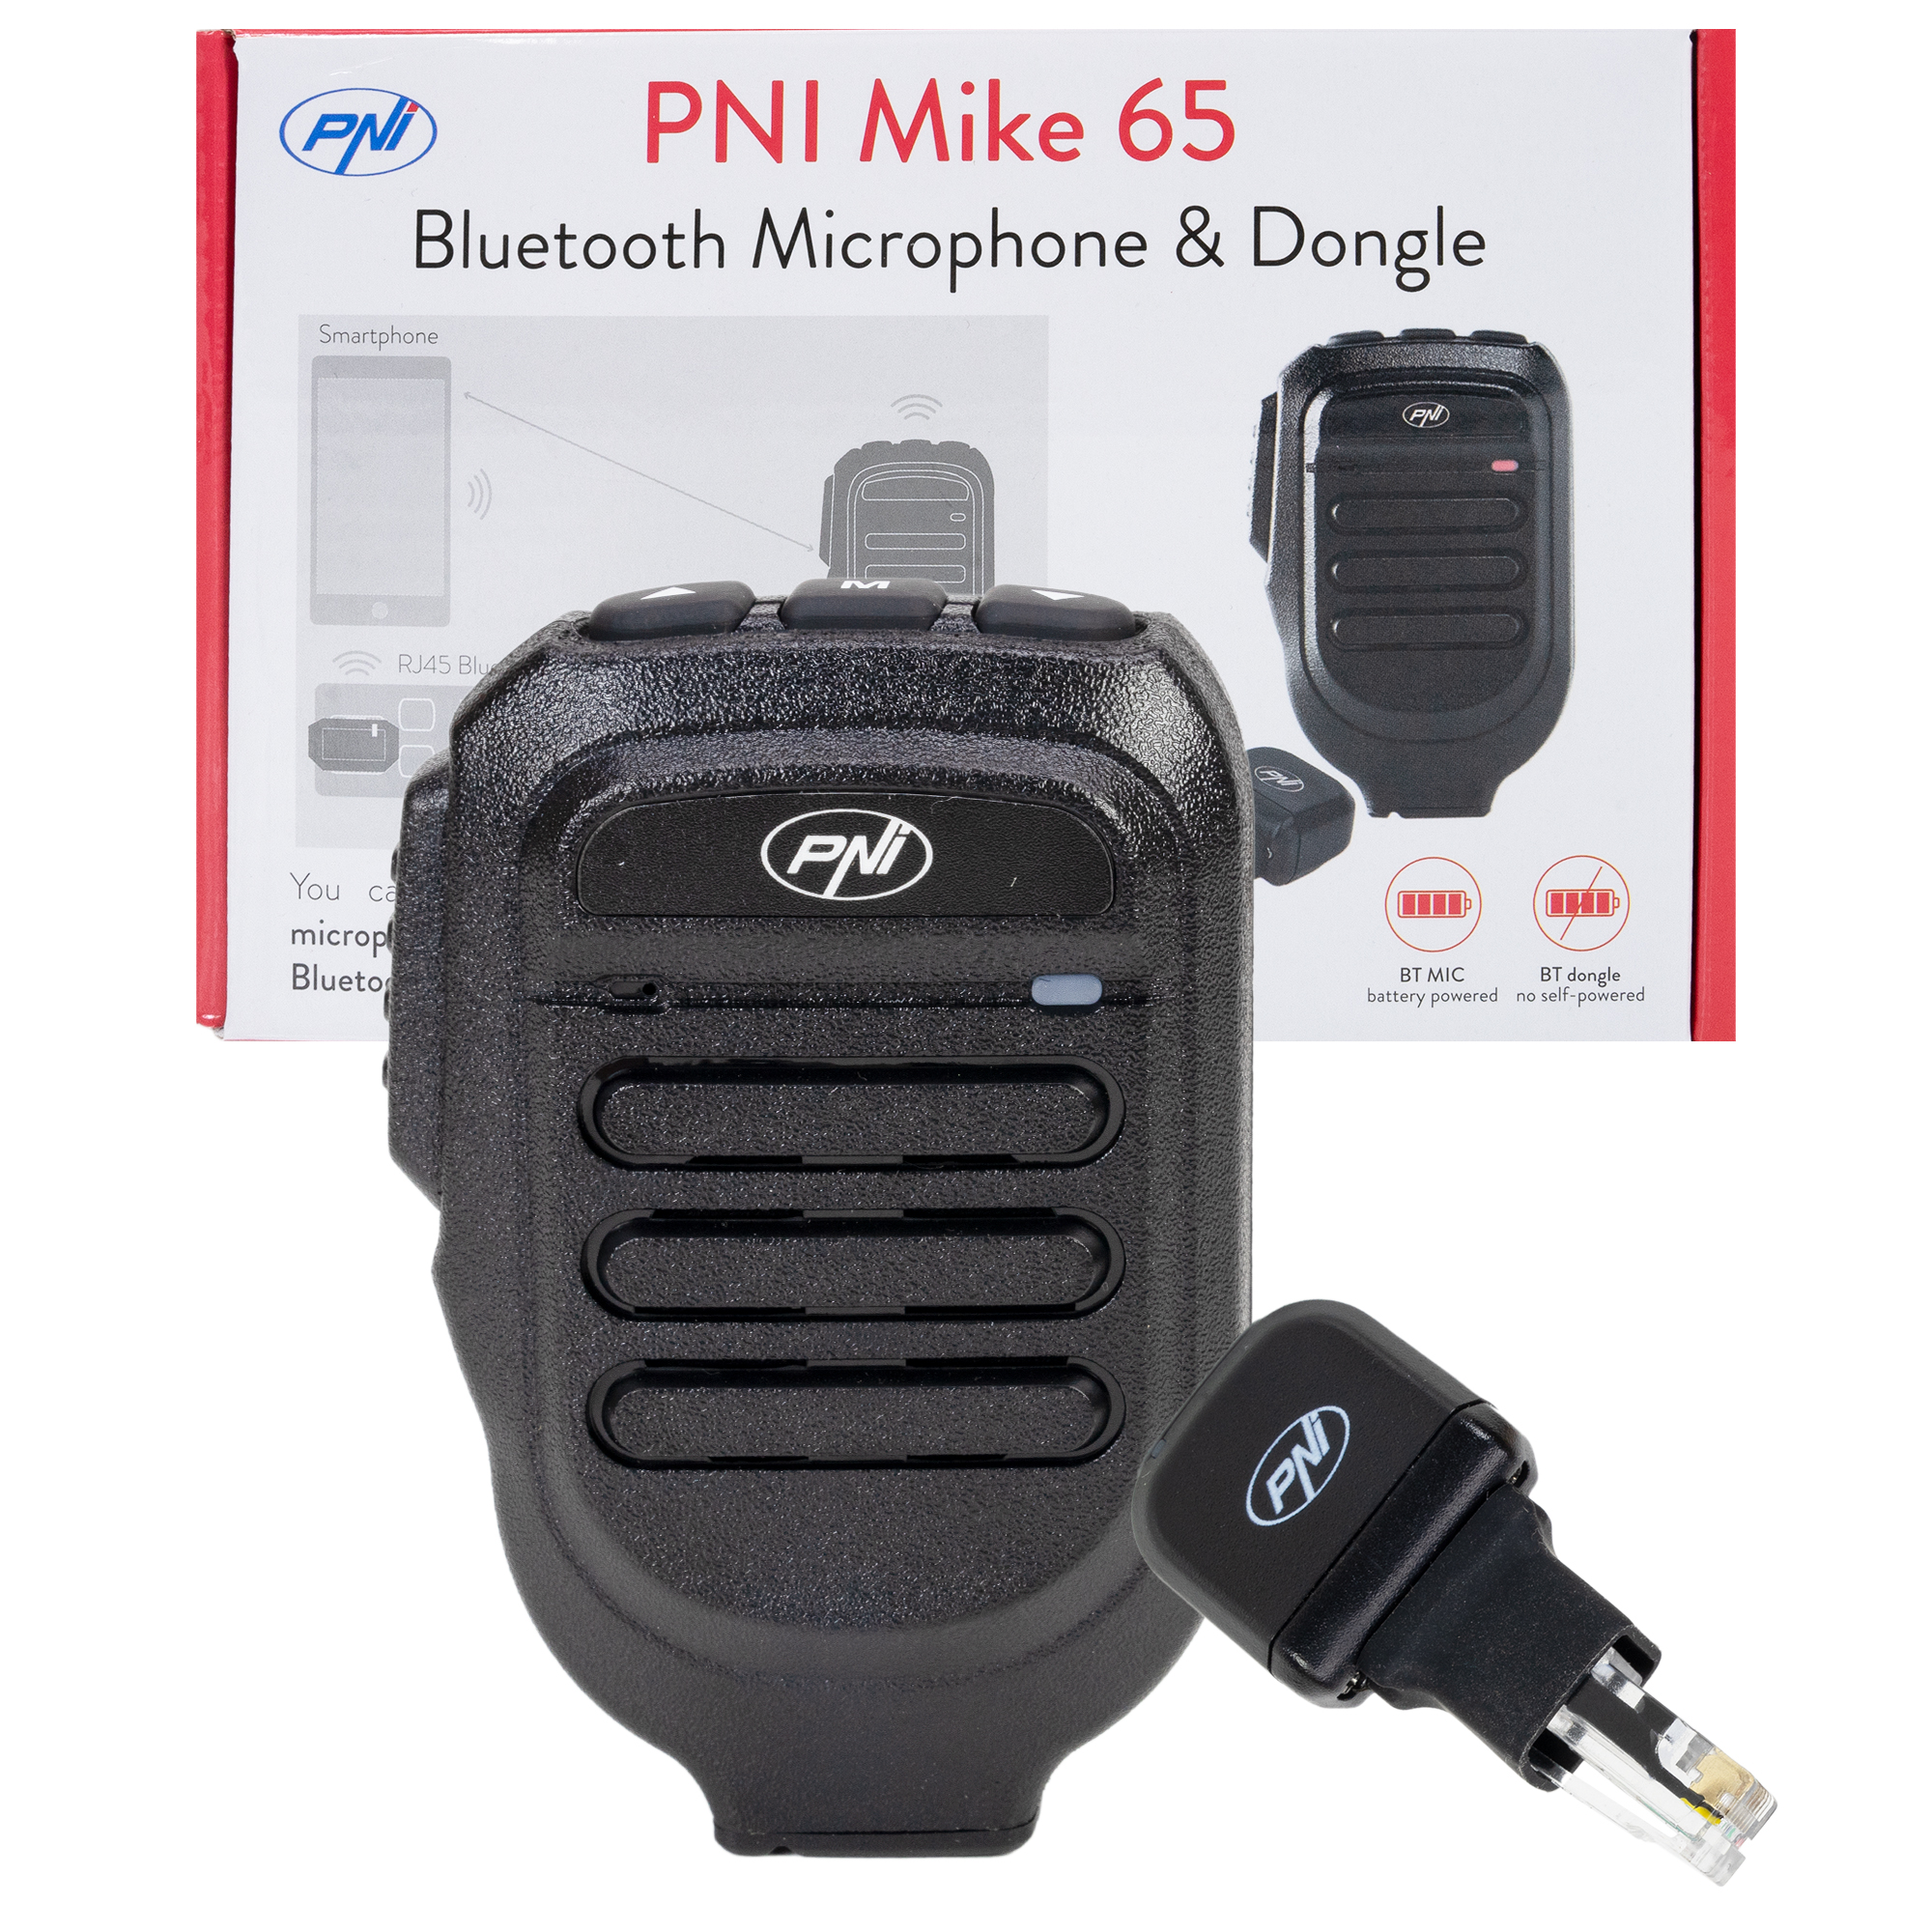 PNI-MIKE65 drahtloses Mikrofon und Dongle - Bild 5